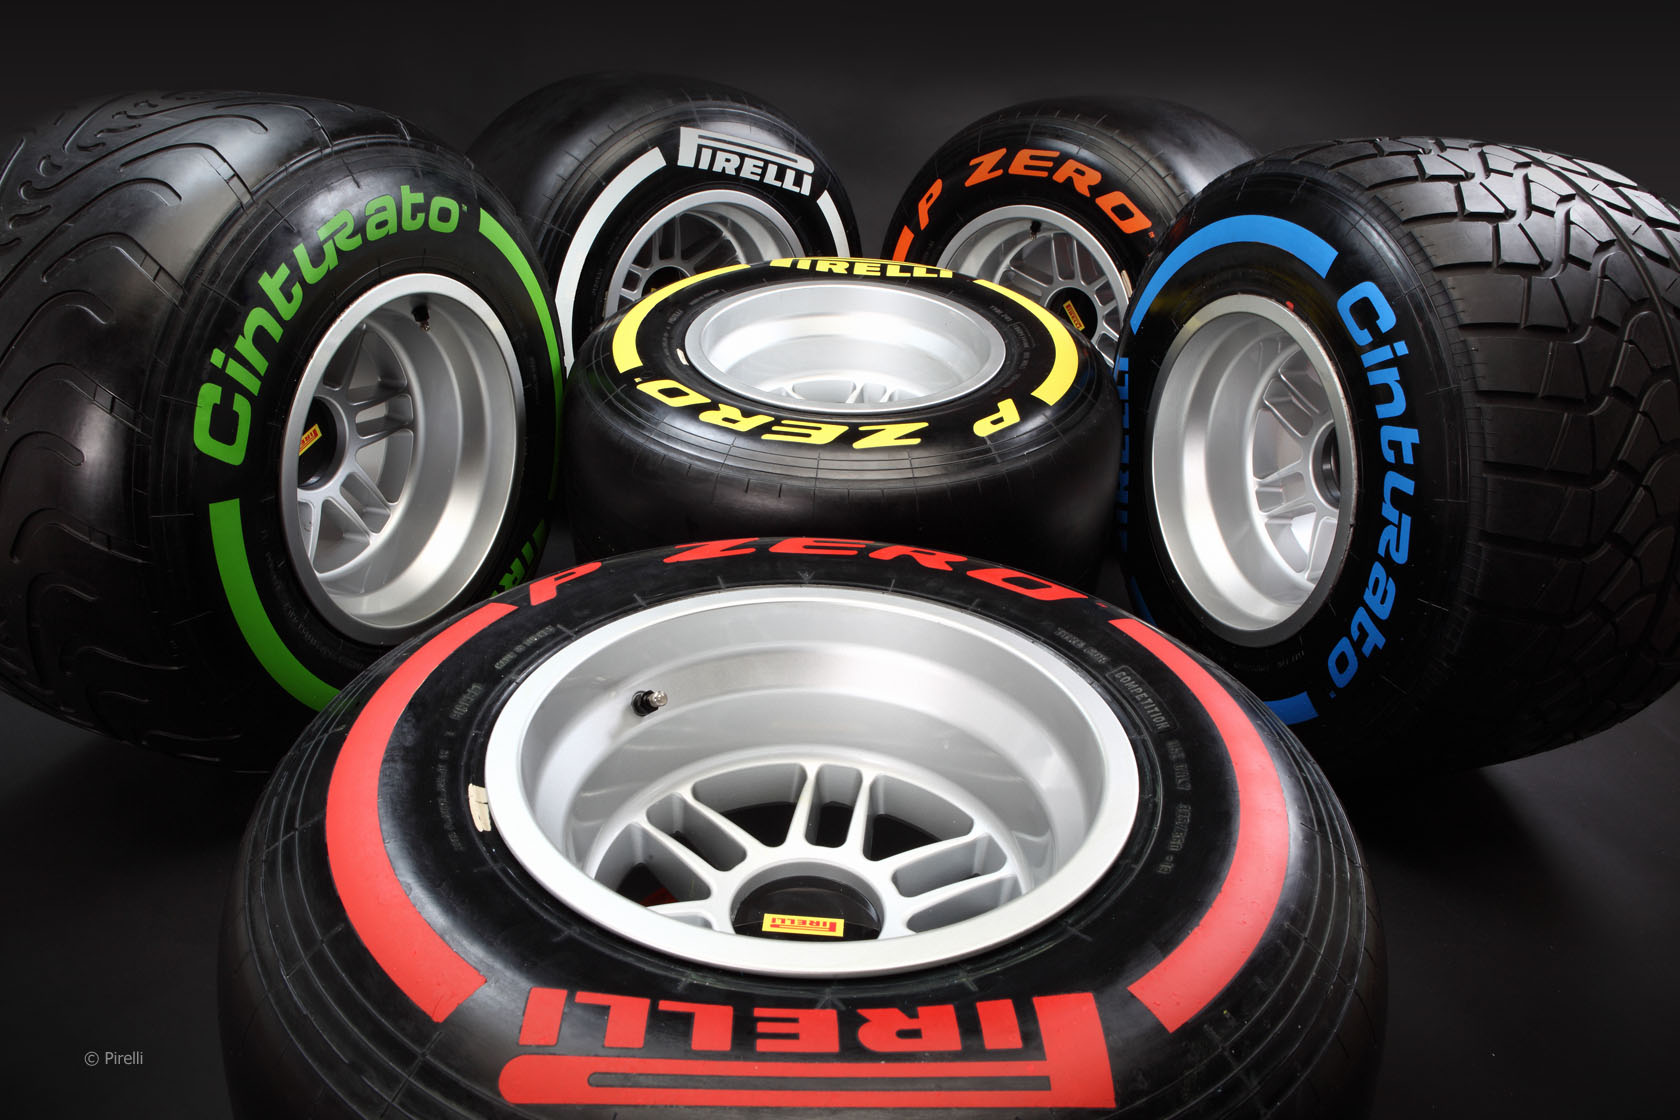 http://f1madness.co.za/wp-content/uploads/2013/05/Pirelli_Formula-1_2013_4.jpg